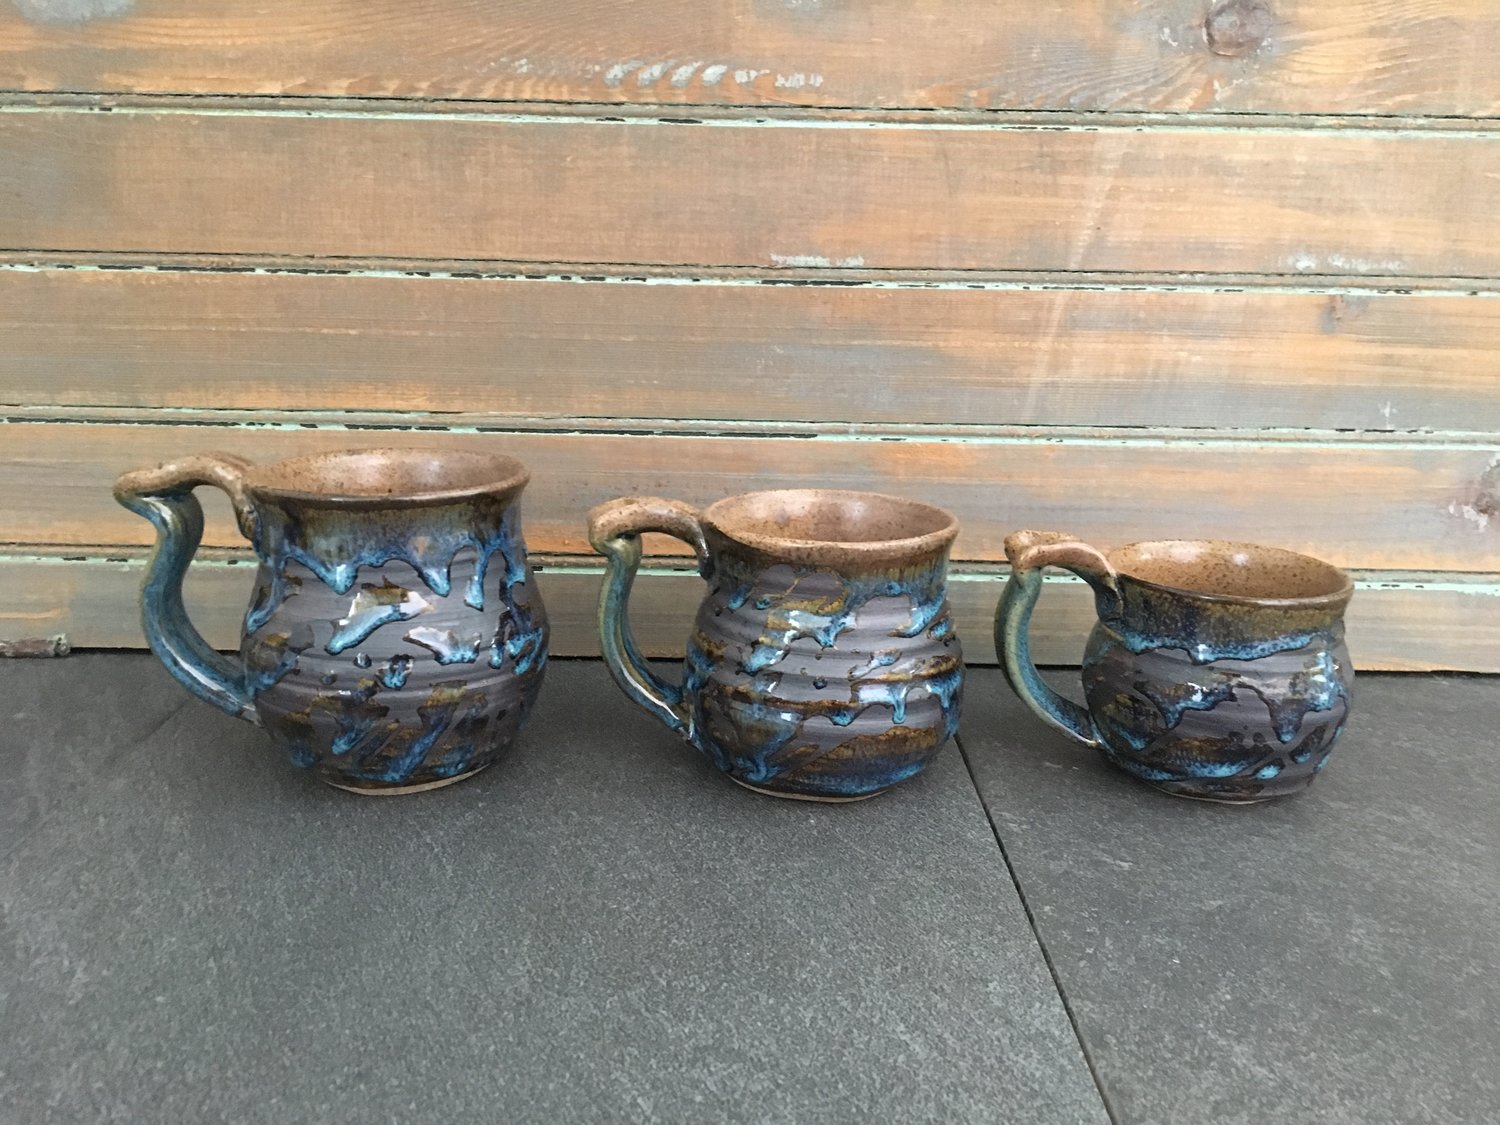 Wax Resist - Mid-South Ceramics